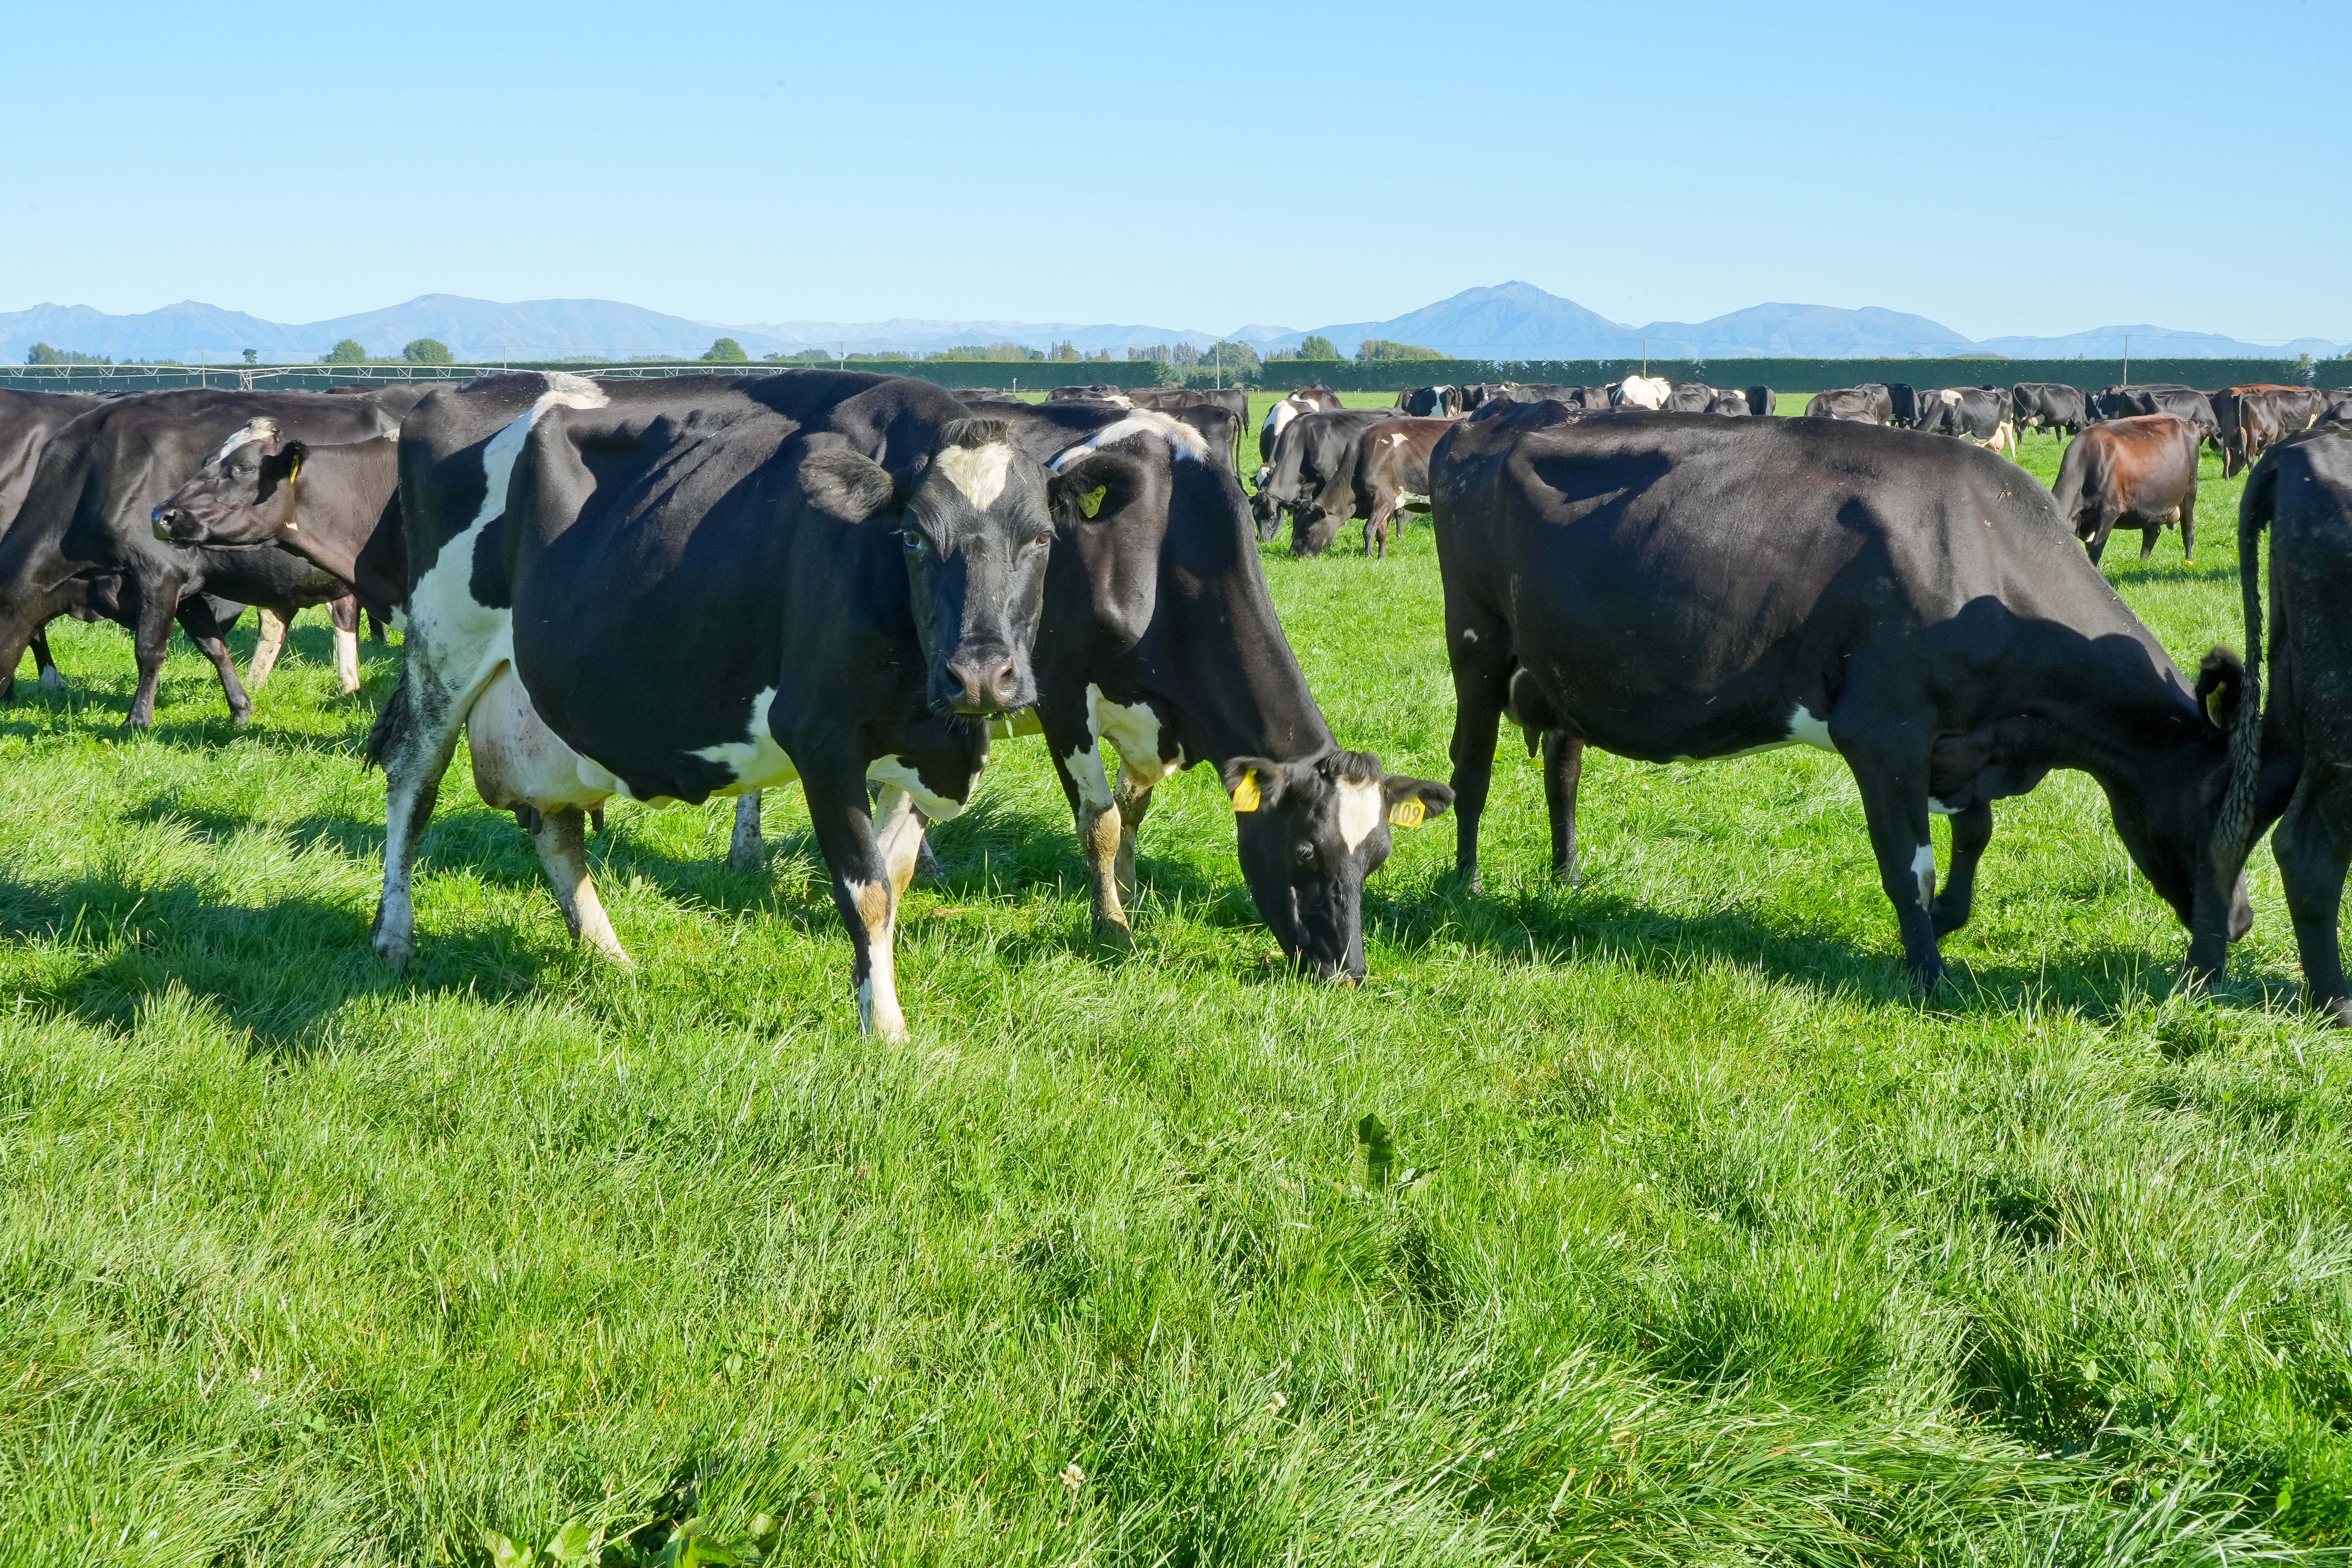 Check for pasture deficiencies ahead of calving season